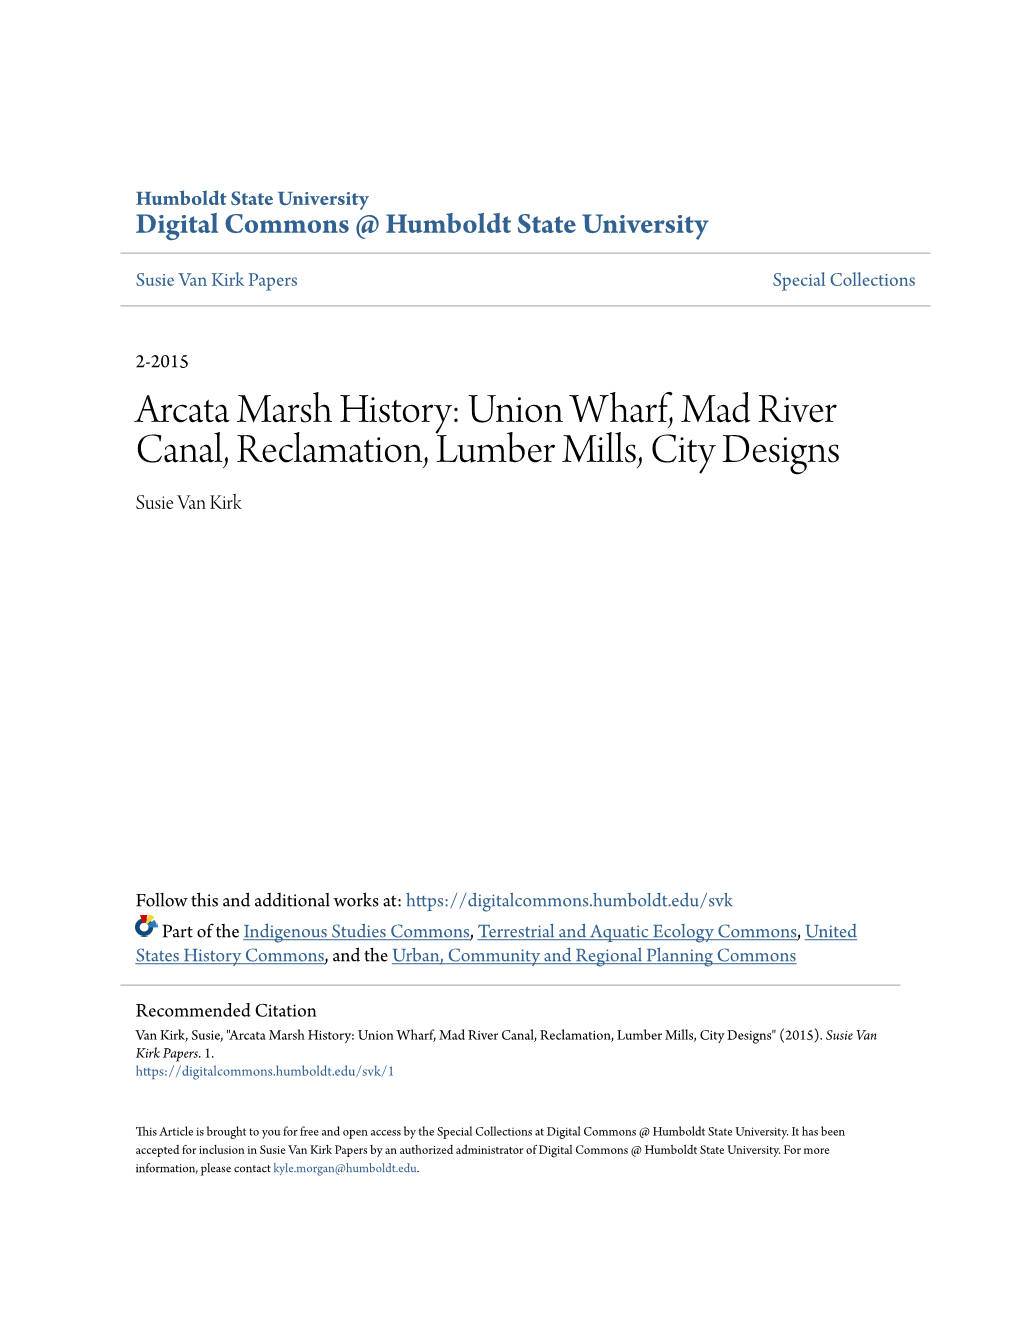 Arcata Marsh History: Union Wharf, Mad River Canal, Reclamation, Lumber Mills, City Designs Susie Van Kirk